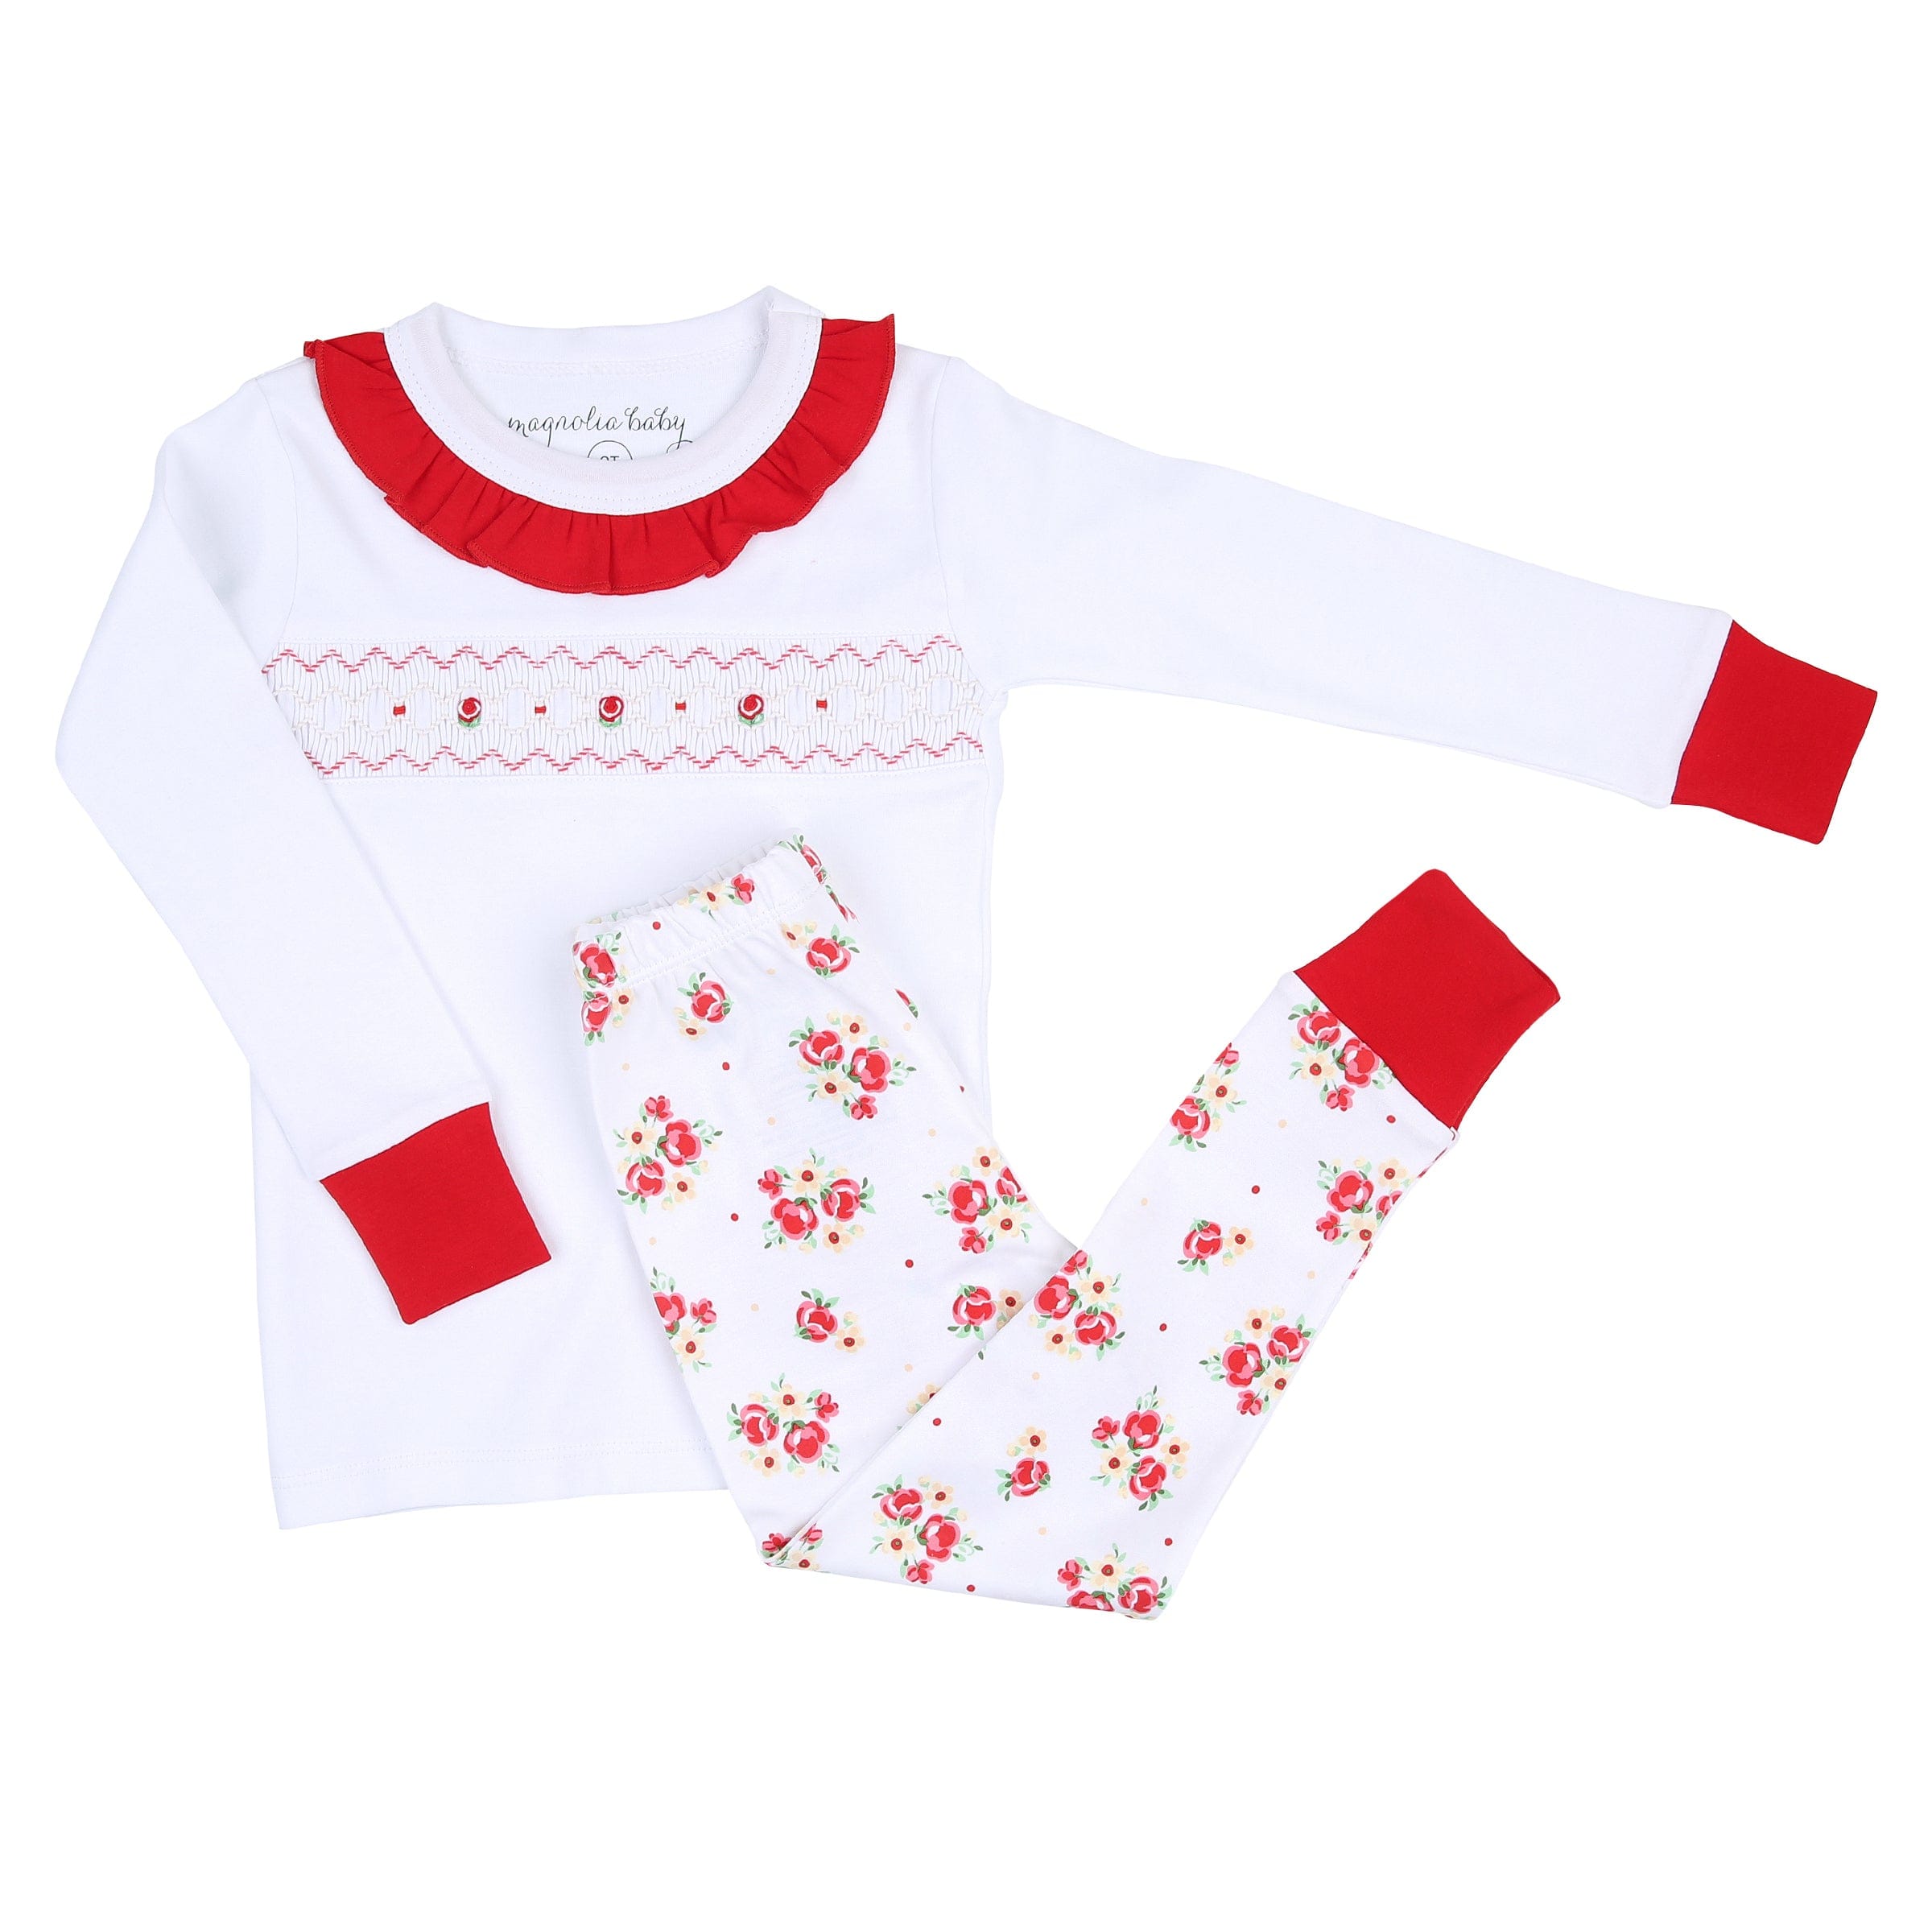 MAGNOLIA BABY - Holiday Annalise’s Classics Smocked Pyjamas - Red